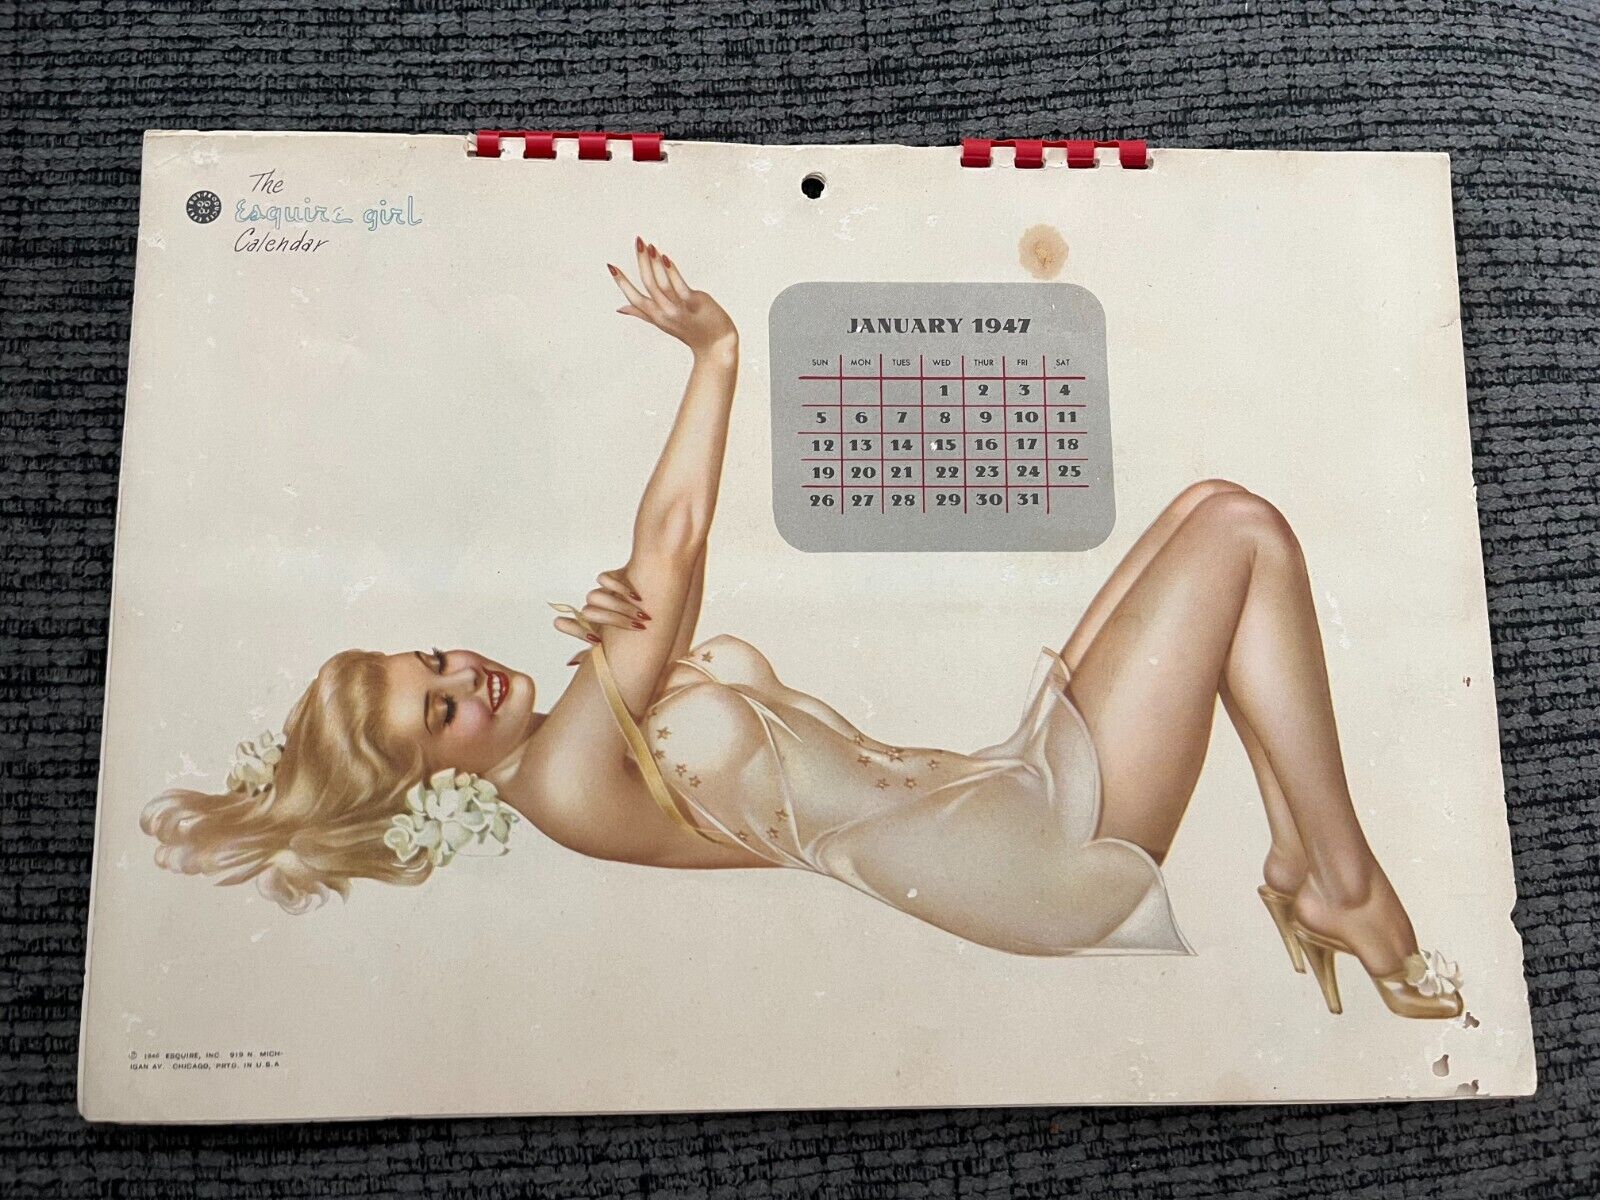 Complete Original Vintage 1947 The Esquire Girl Calendar 12 Months